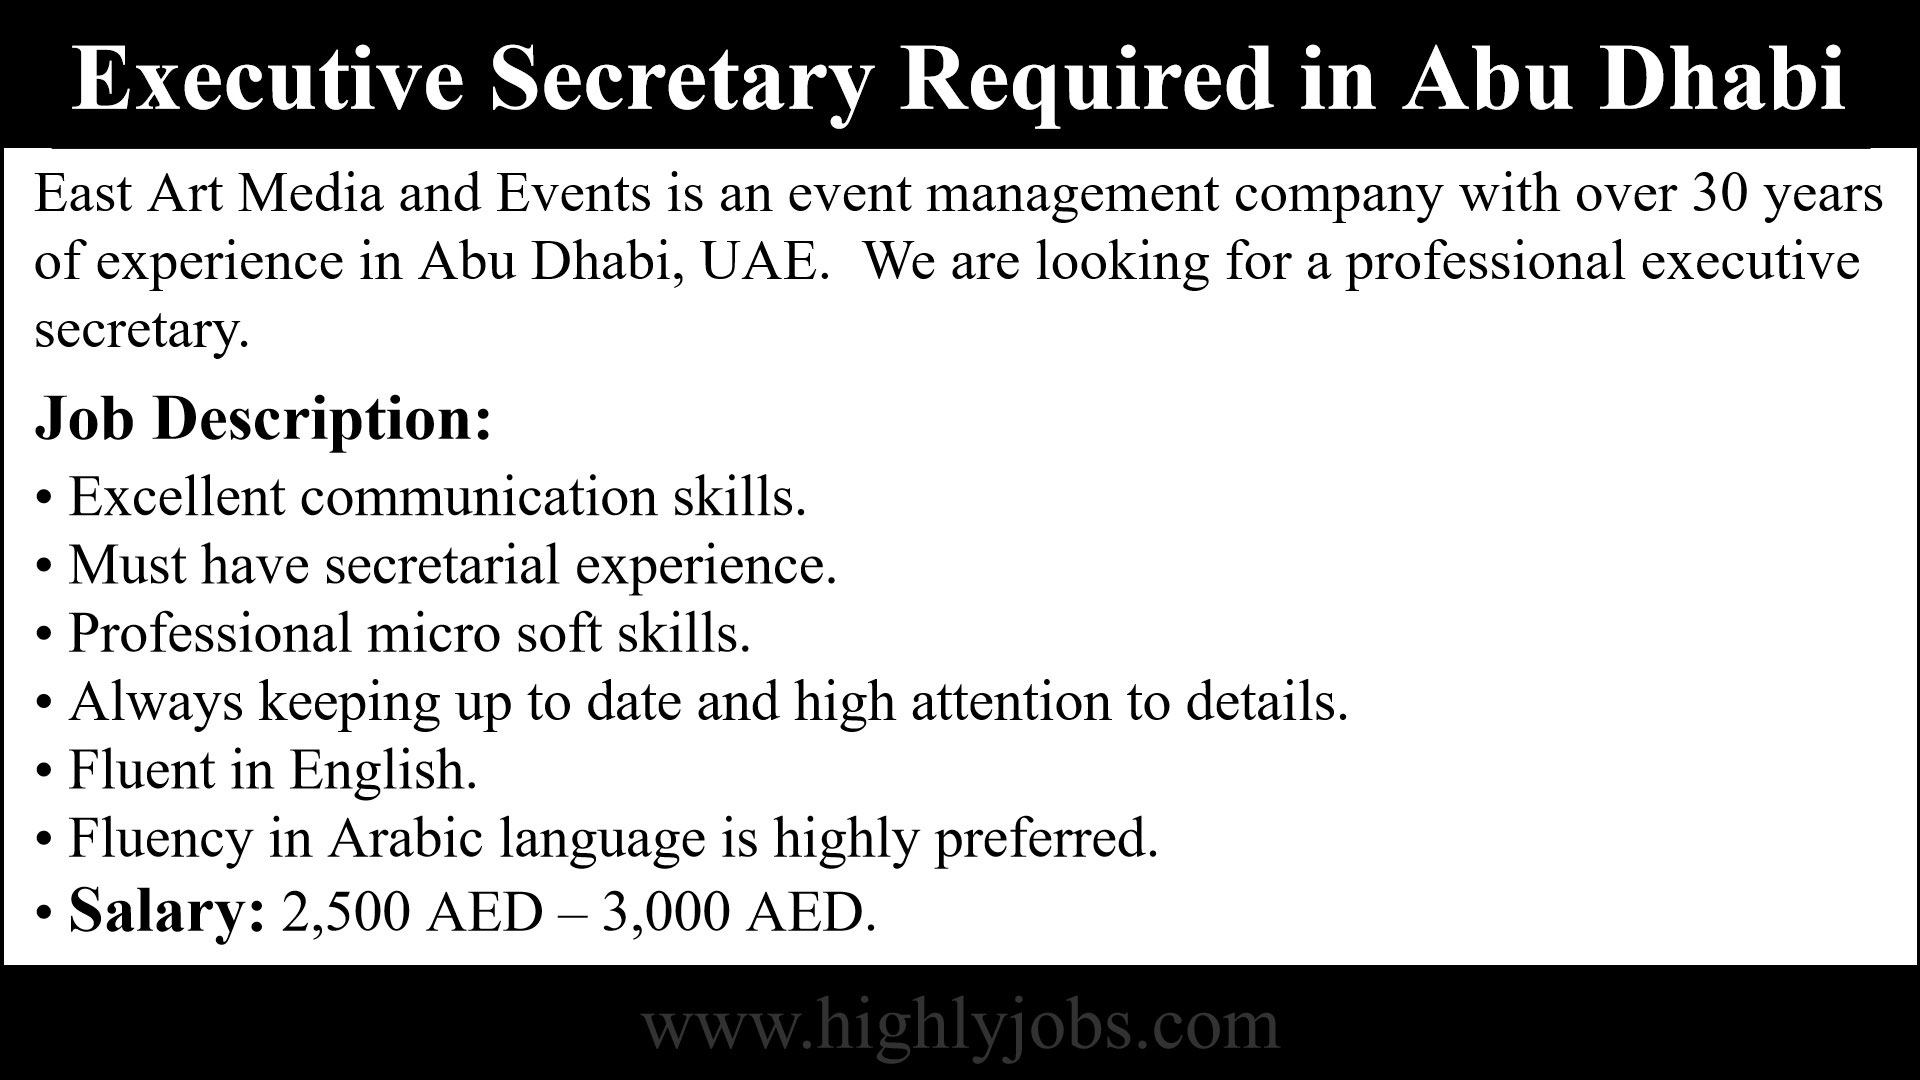 Executive Secretary Required in Abu Dhabi